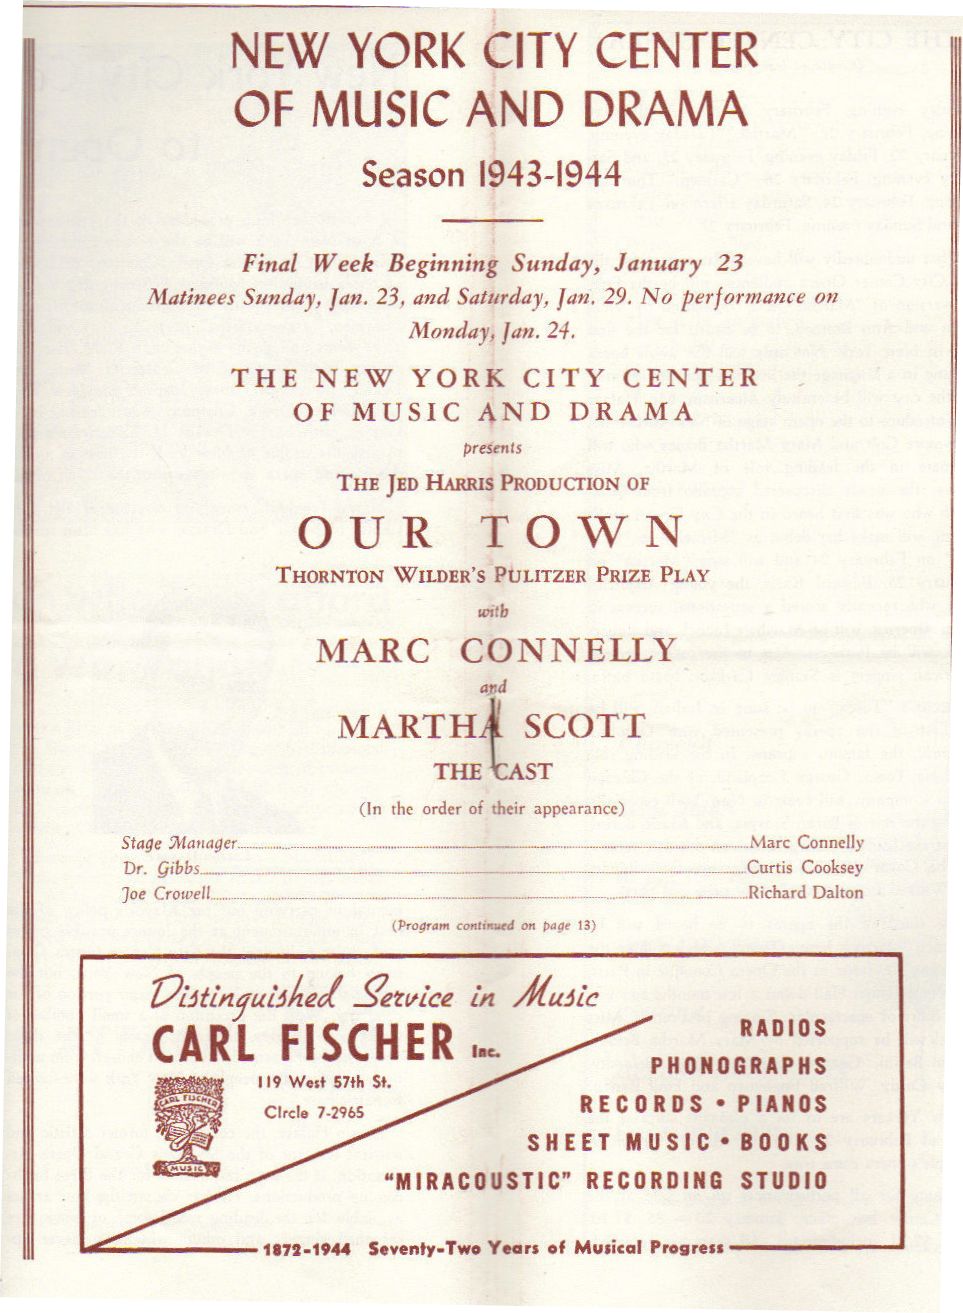 1944-revival-at-new-yorks-city-center_4313760945_o.jpg